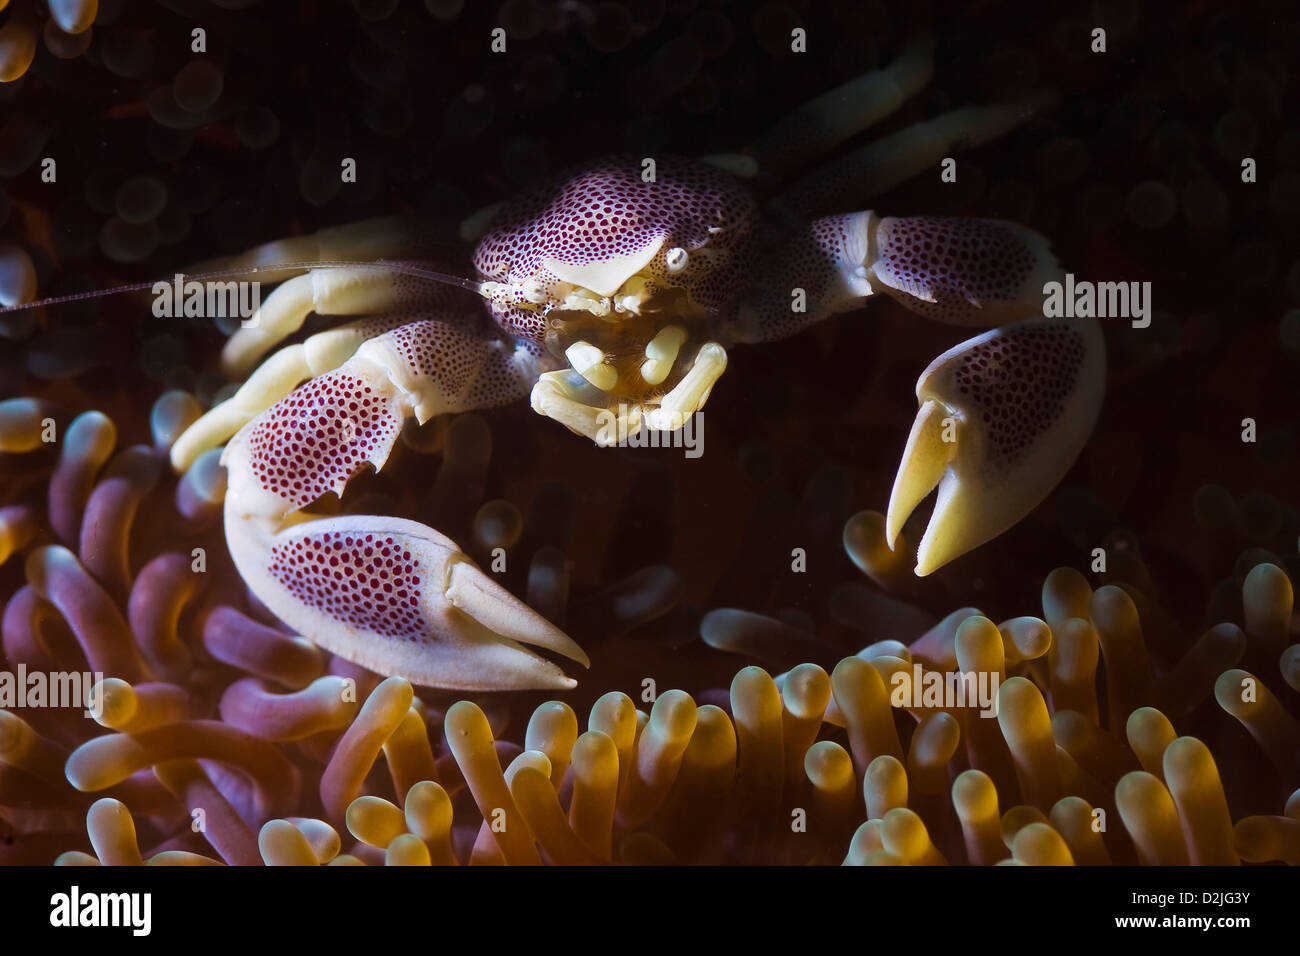 Violeta Pocelain mierda en anémona submarino en los arrecifes en Sipadan, Malasia Foto de stock